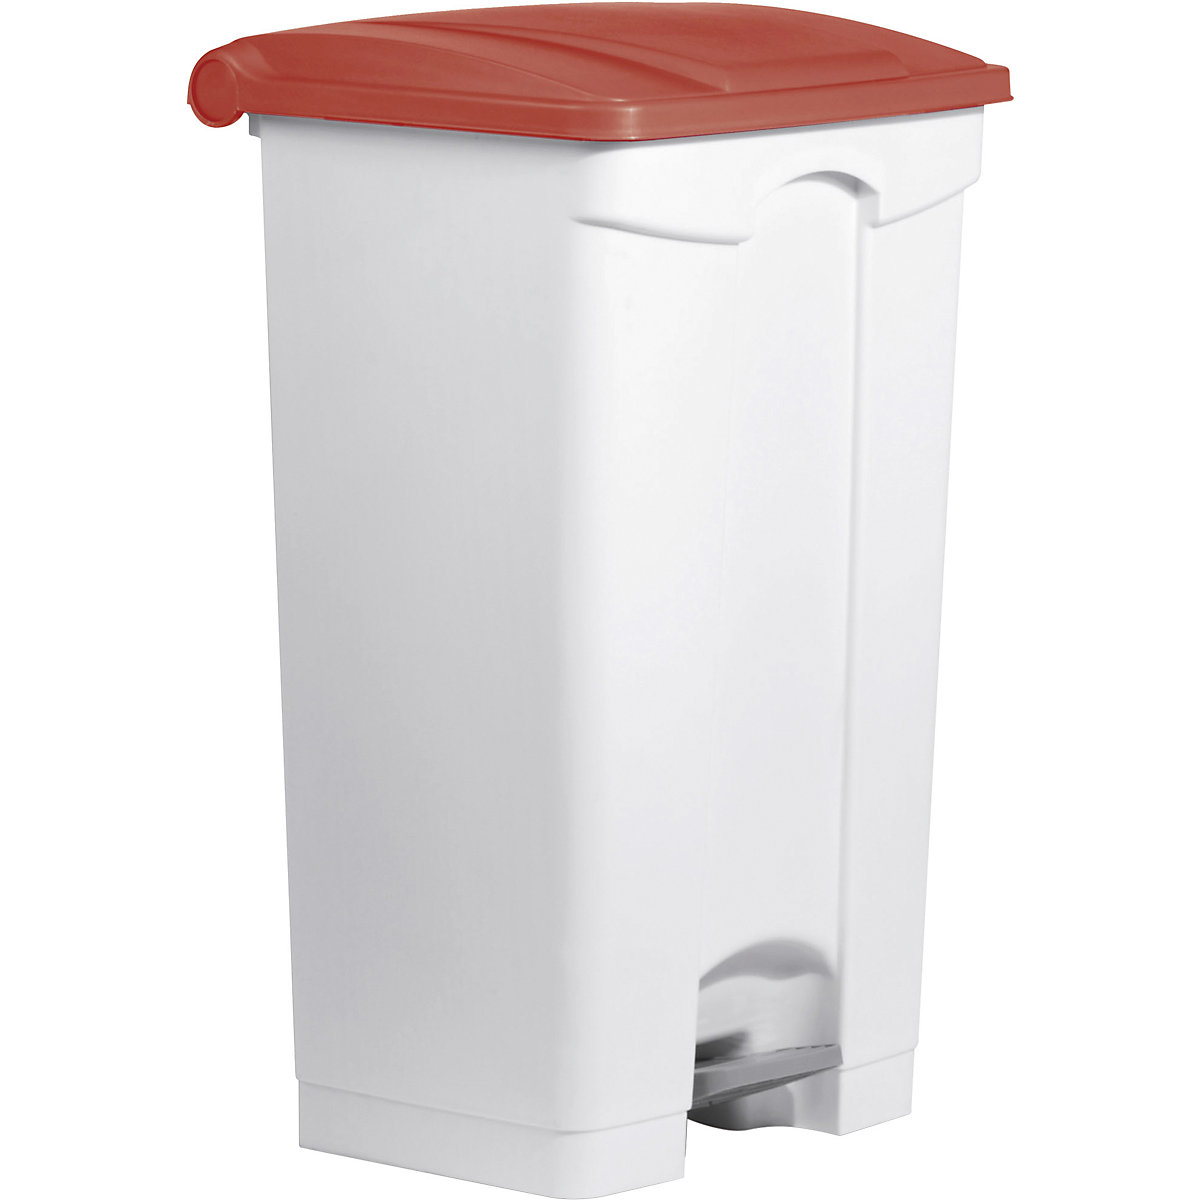 Pedal bin – helit, capacity 90 l, WxHxD 500 x 830 x 410 mm, white, red lid-6